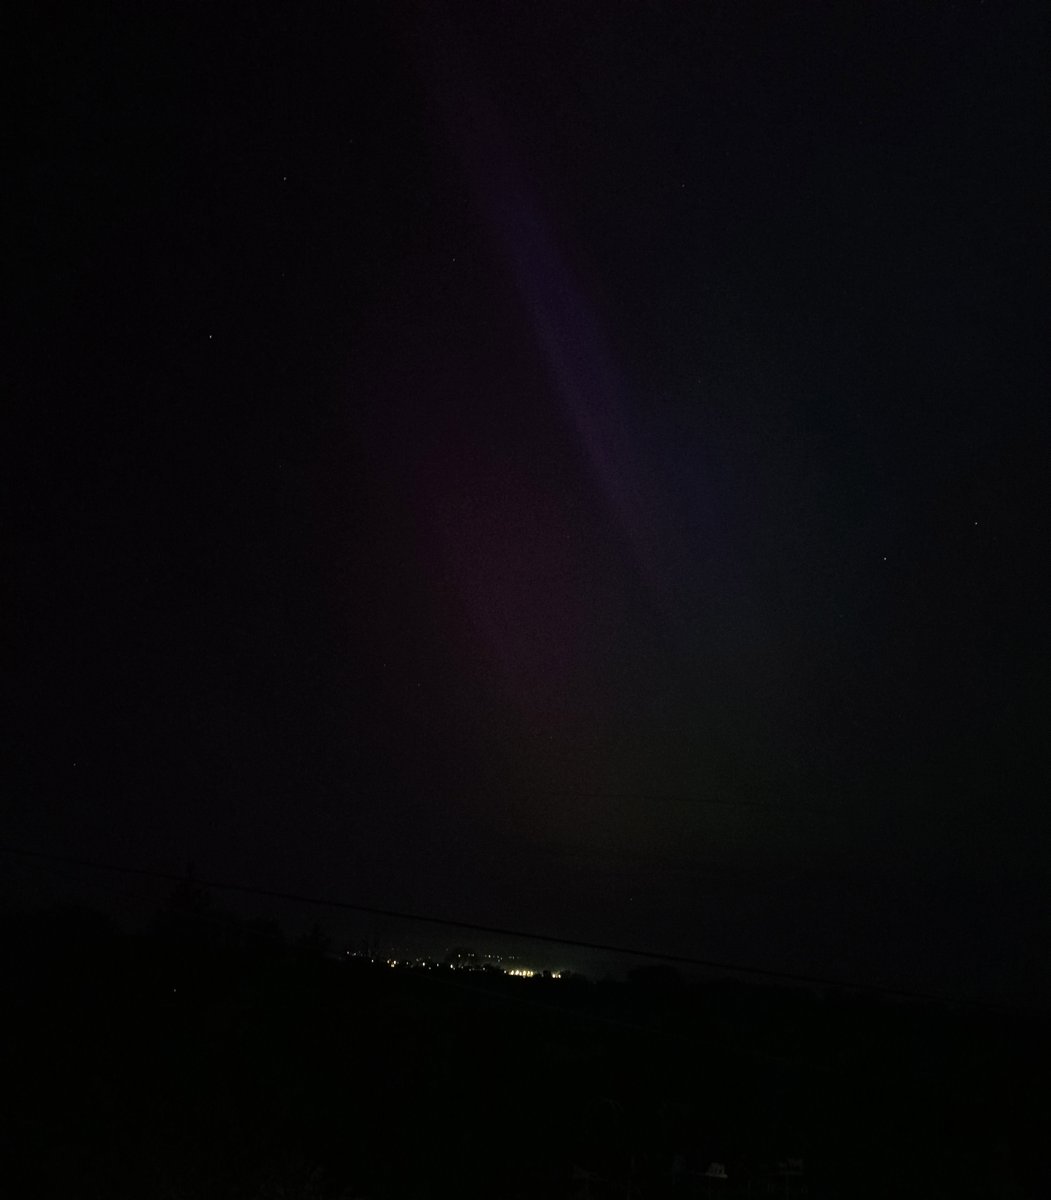 Aurora over Fishguard tonight. Around 1 second exposure, no filters. Subtle but beautiful.